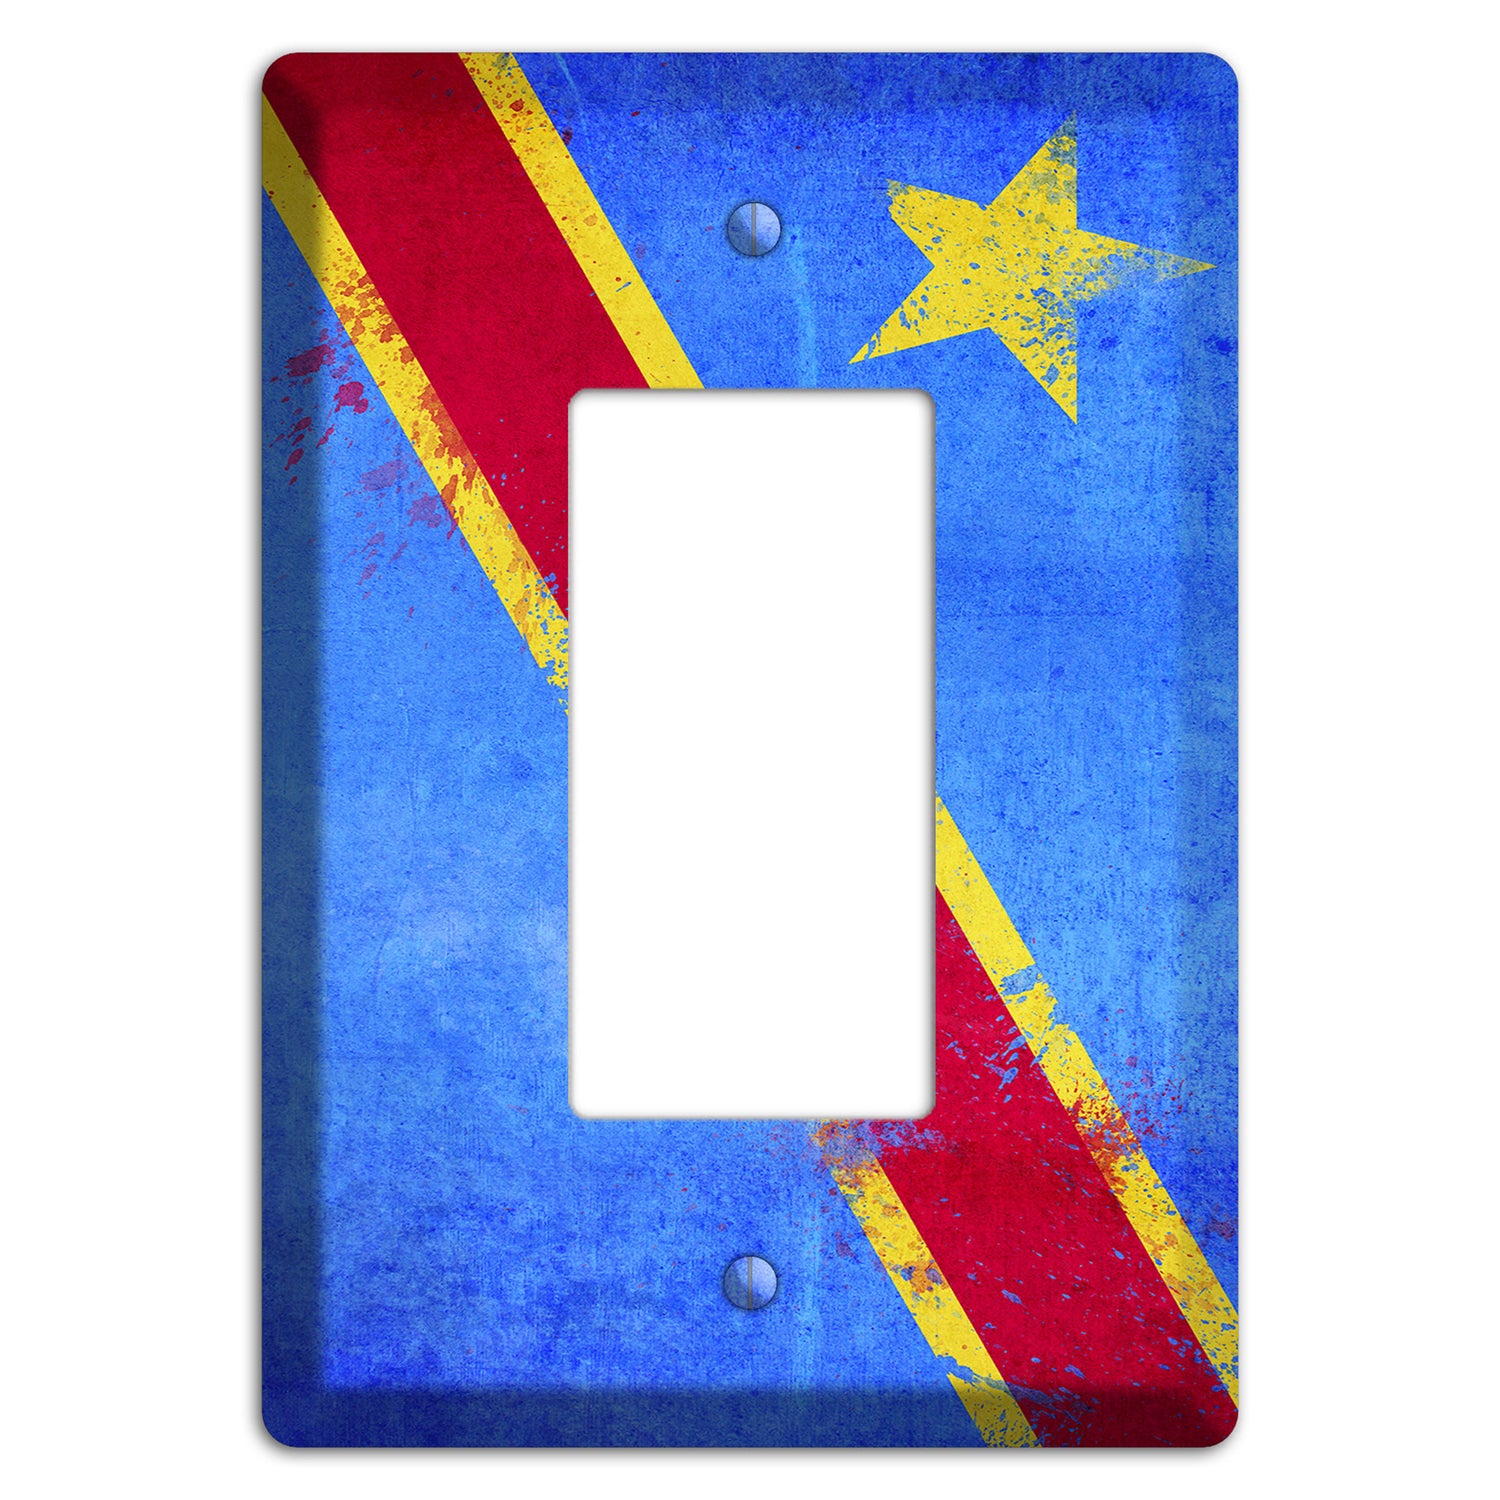 Congo Democratic Republic of the Cover Plates Rocker Wallplate